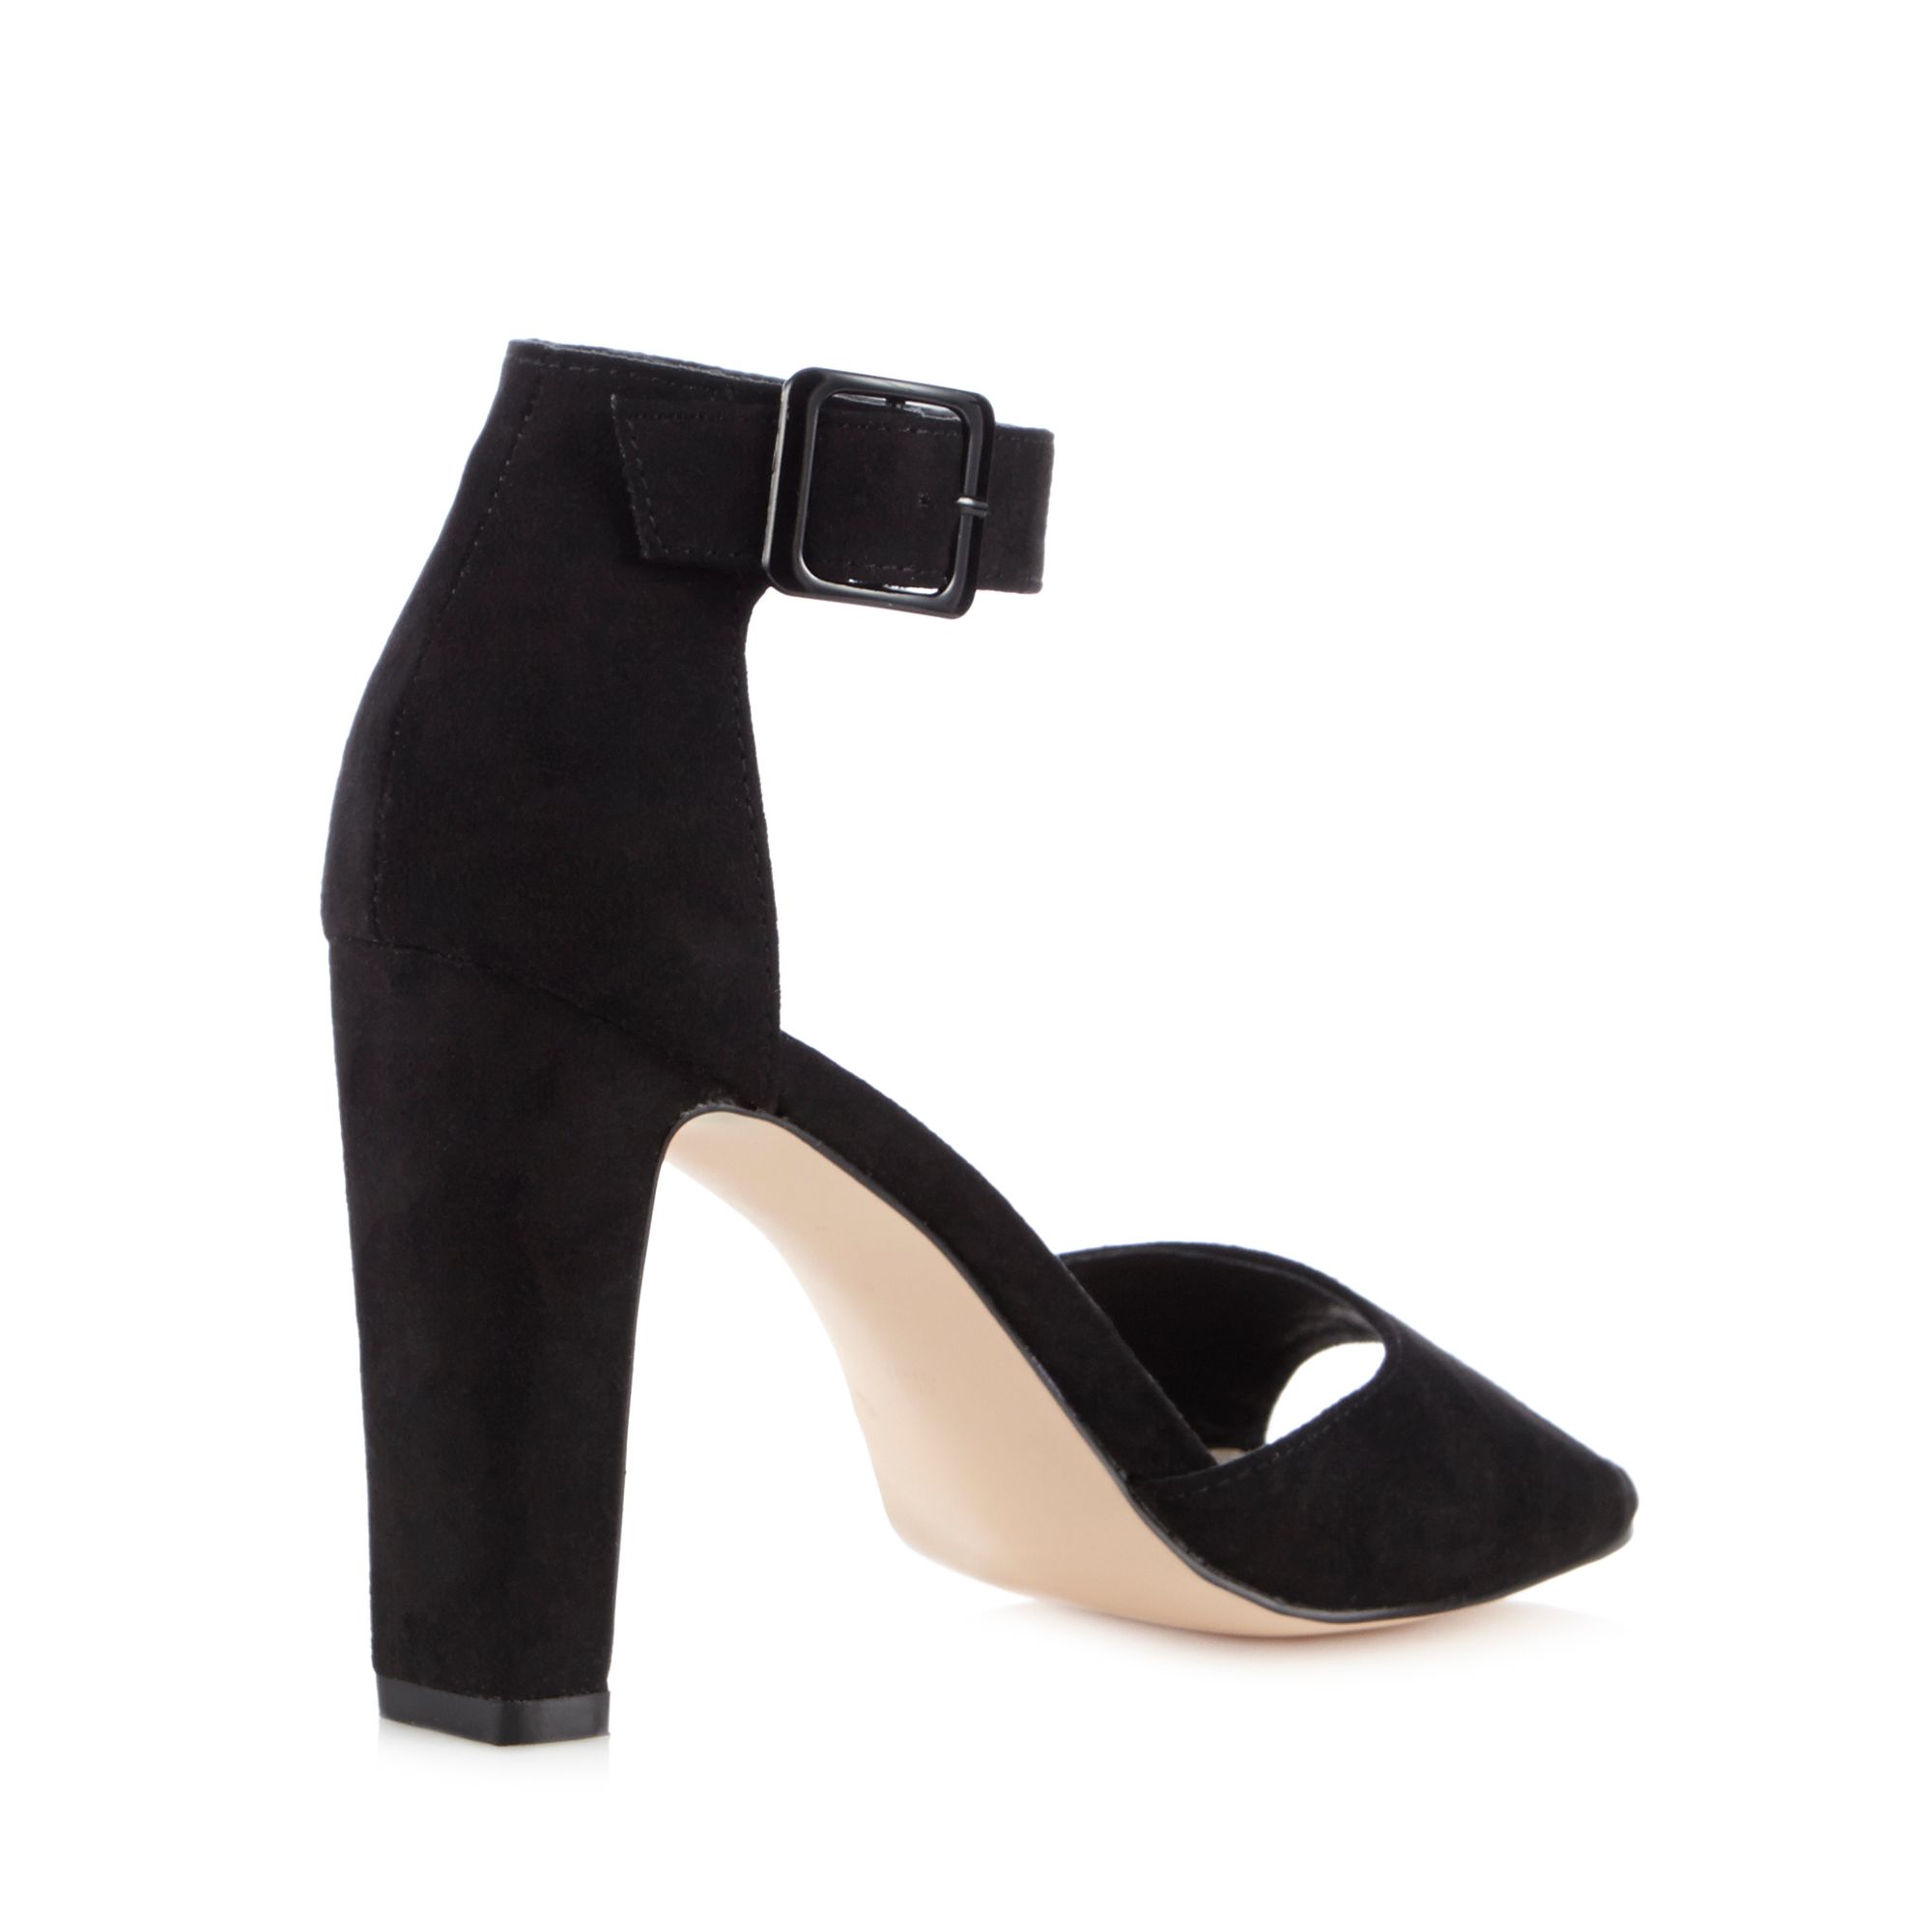 Faith Womens Black Suedette High Heel Sandals From Debenhams | eBay